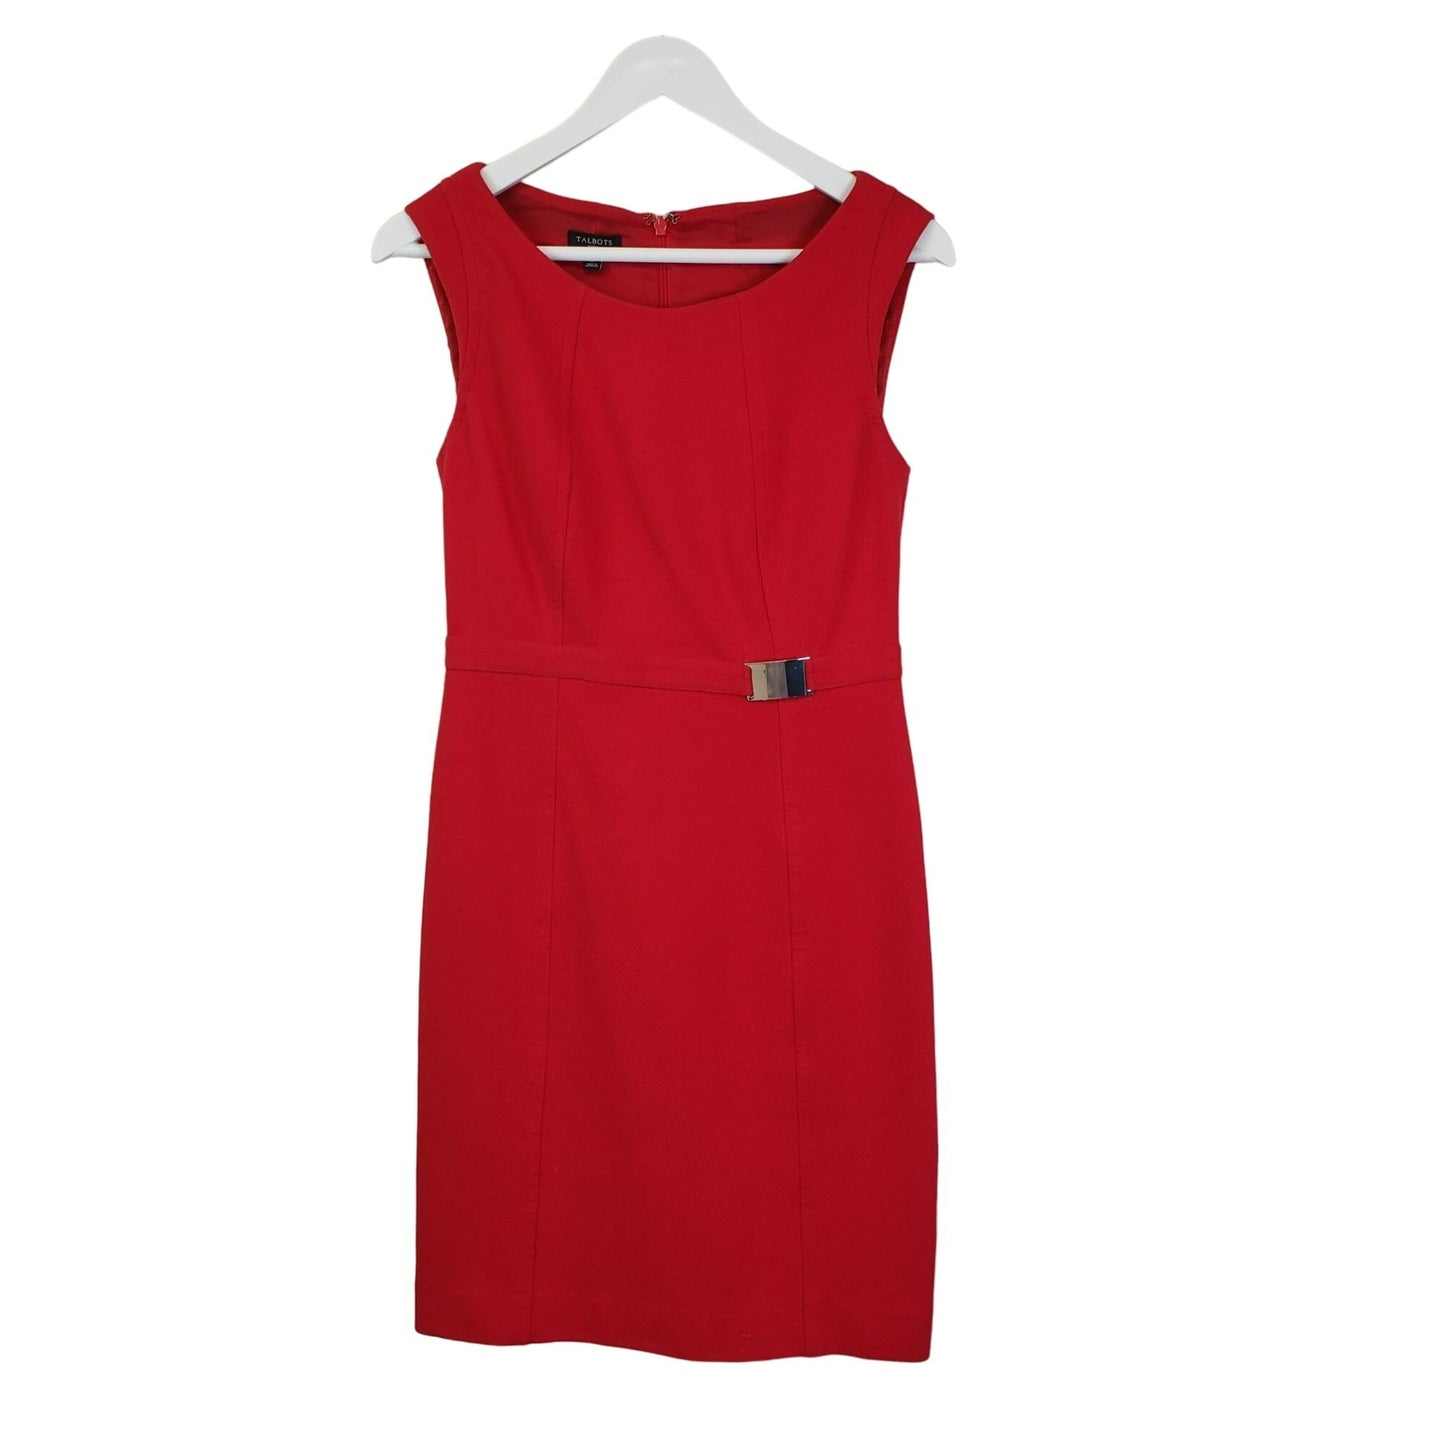 Talbots Red Textured Sheath Dress Size 2 Petite